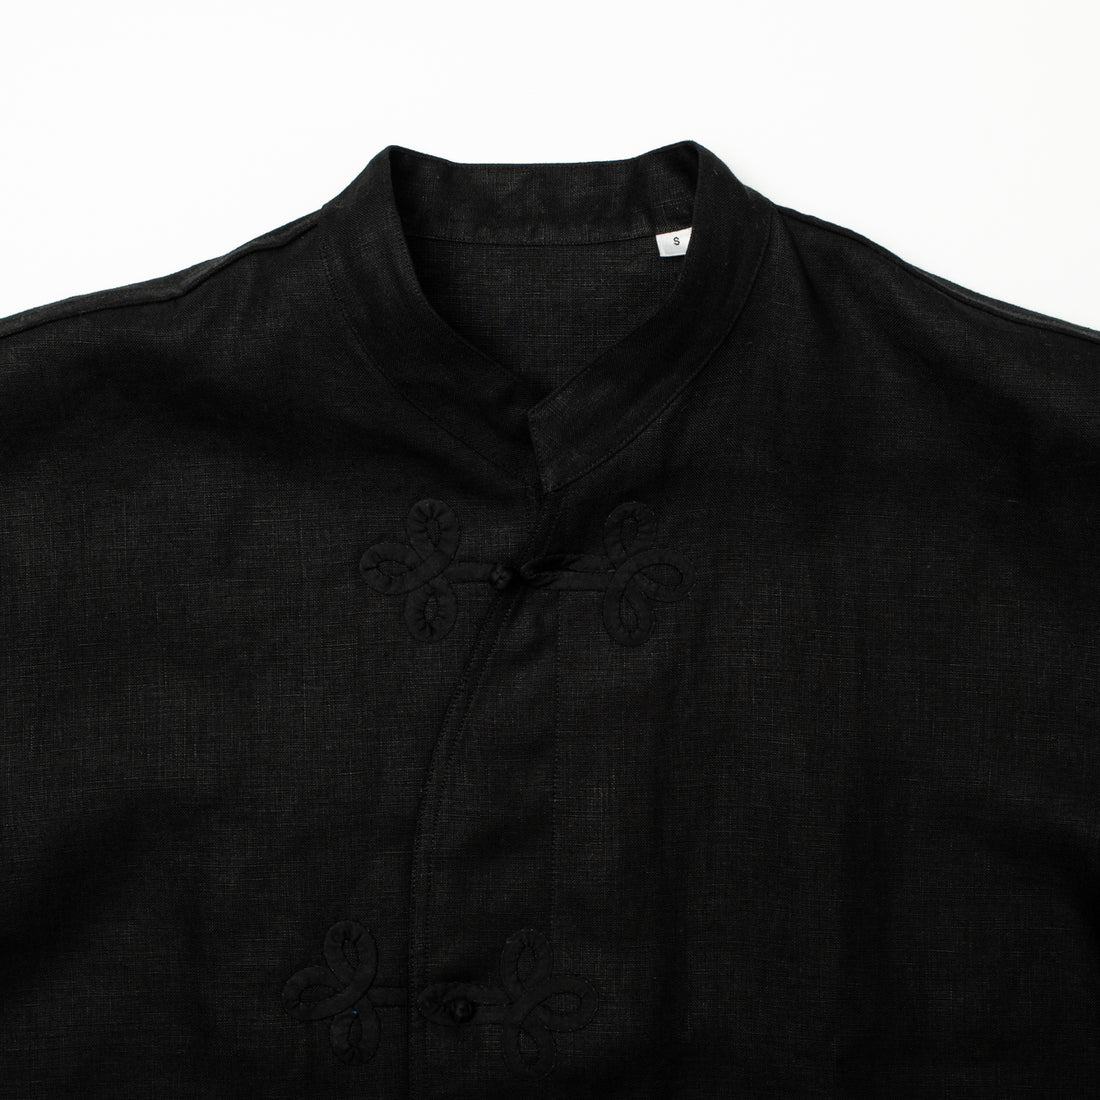 Bryceland's Frogged Button Shirt Black